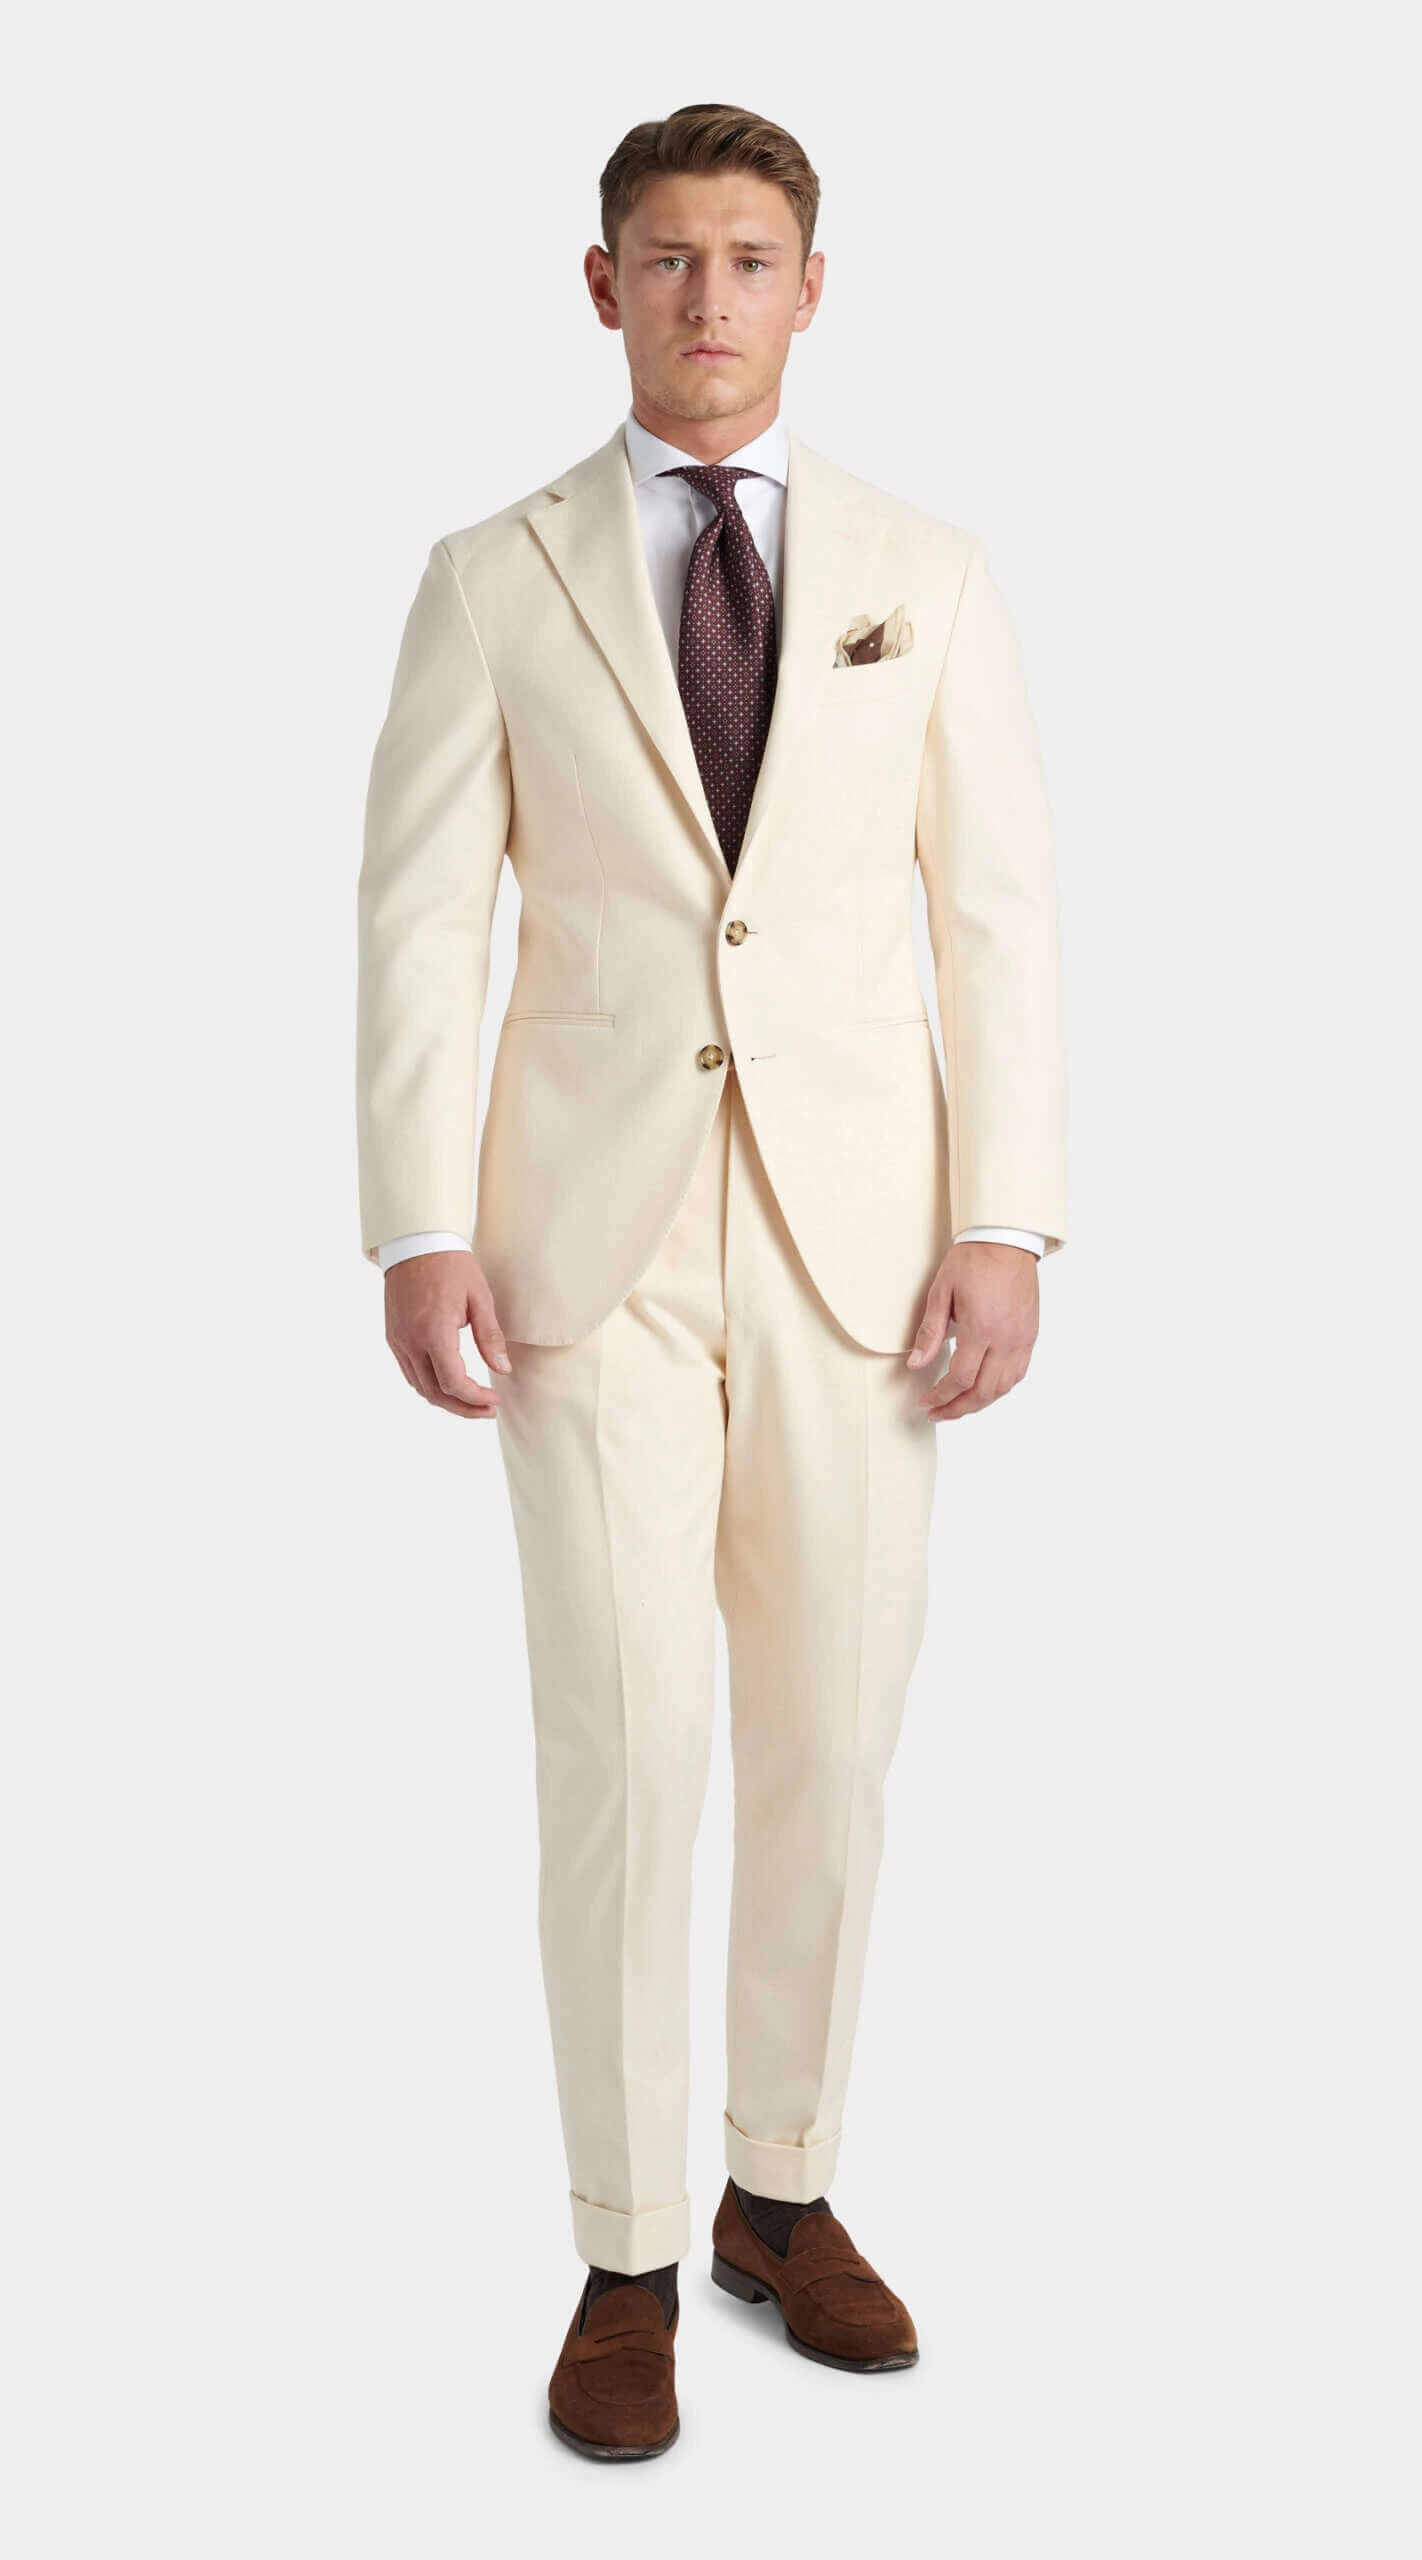 Cream Herringbone suit / cremefarvede herringbone jakkesæt / cremefarbene Herringbone-Anzug / Kremfarget herringbone-dress